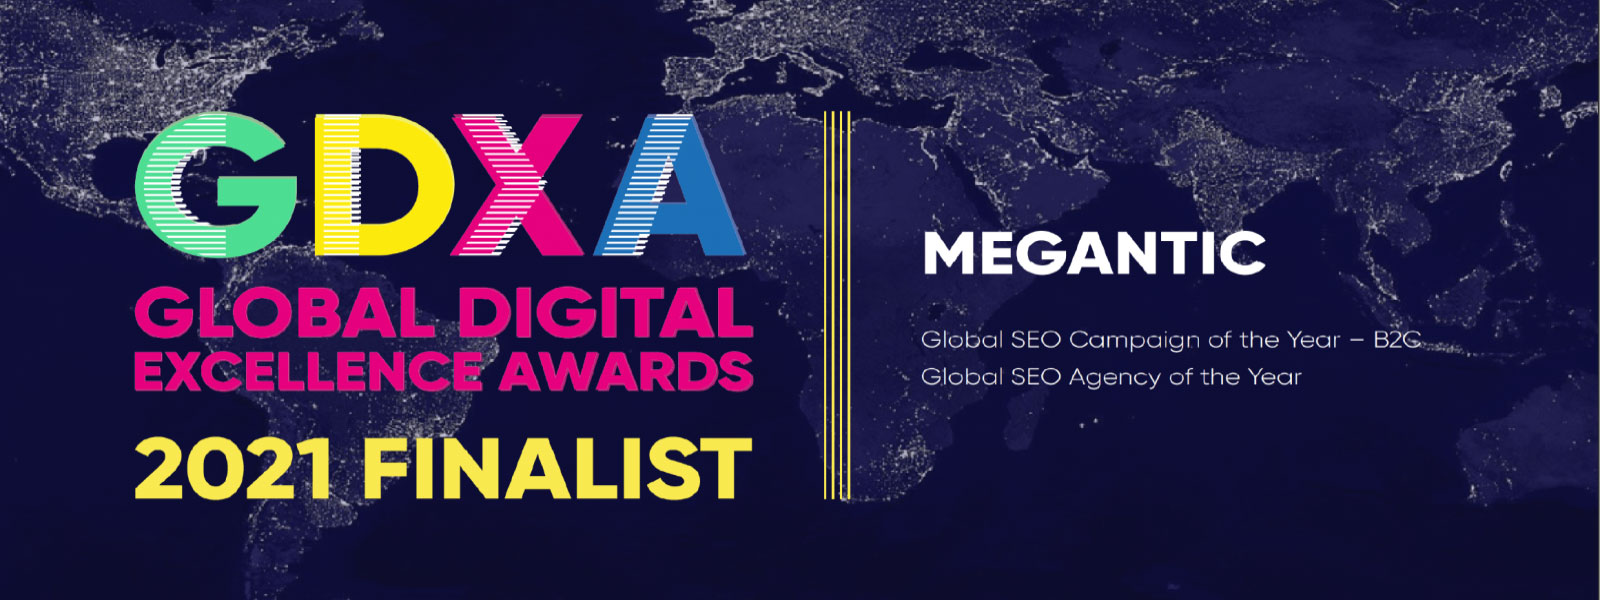 Global Digital Excellence Awards